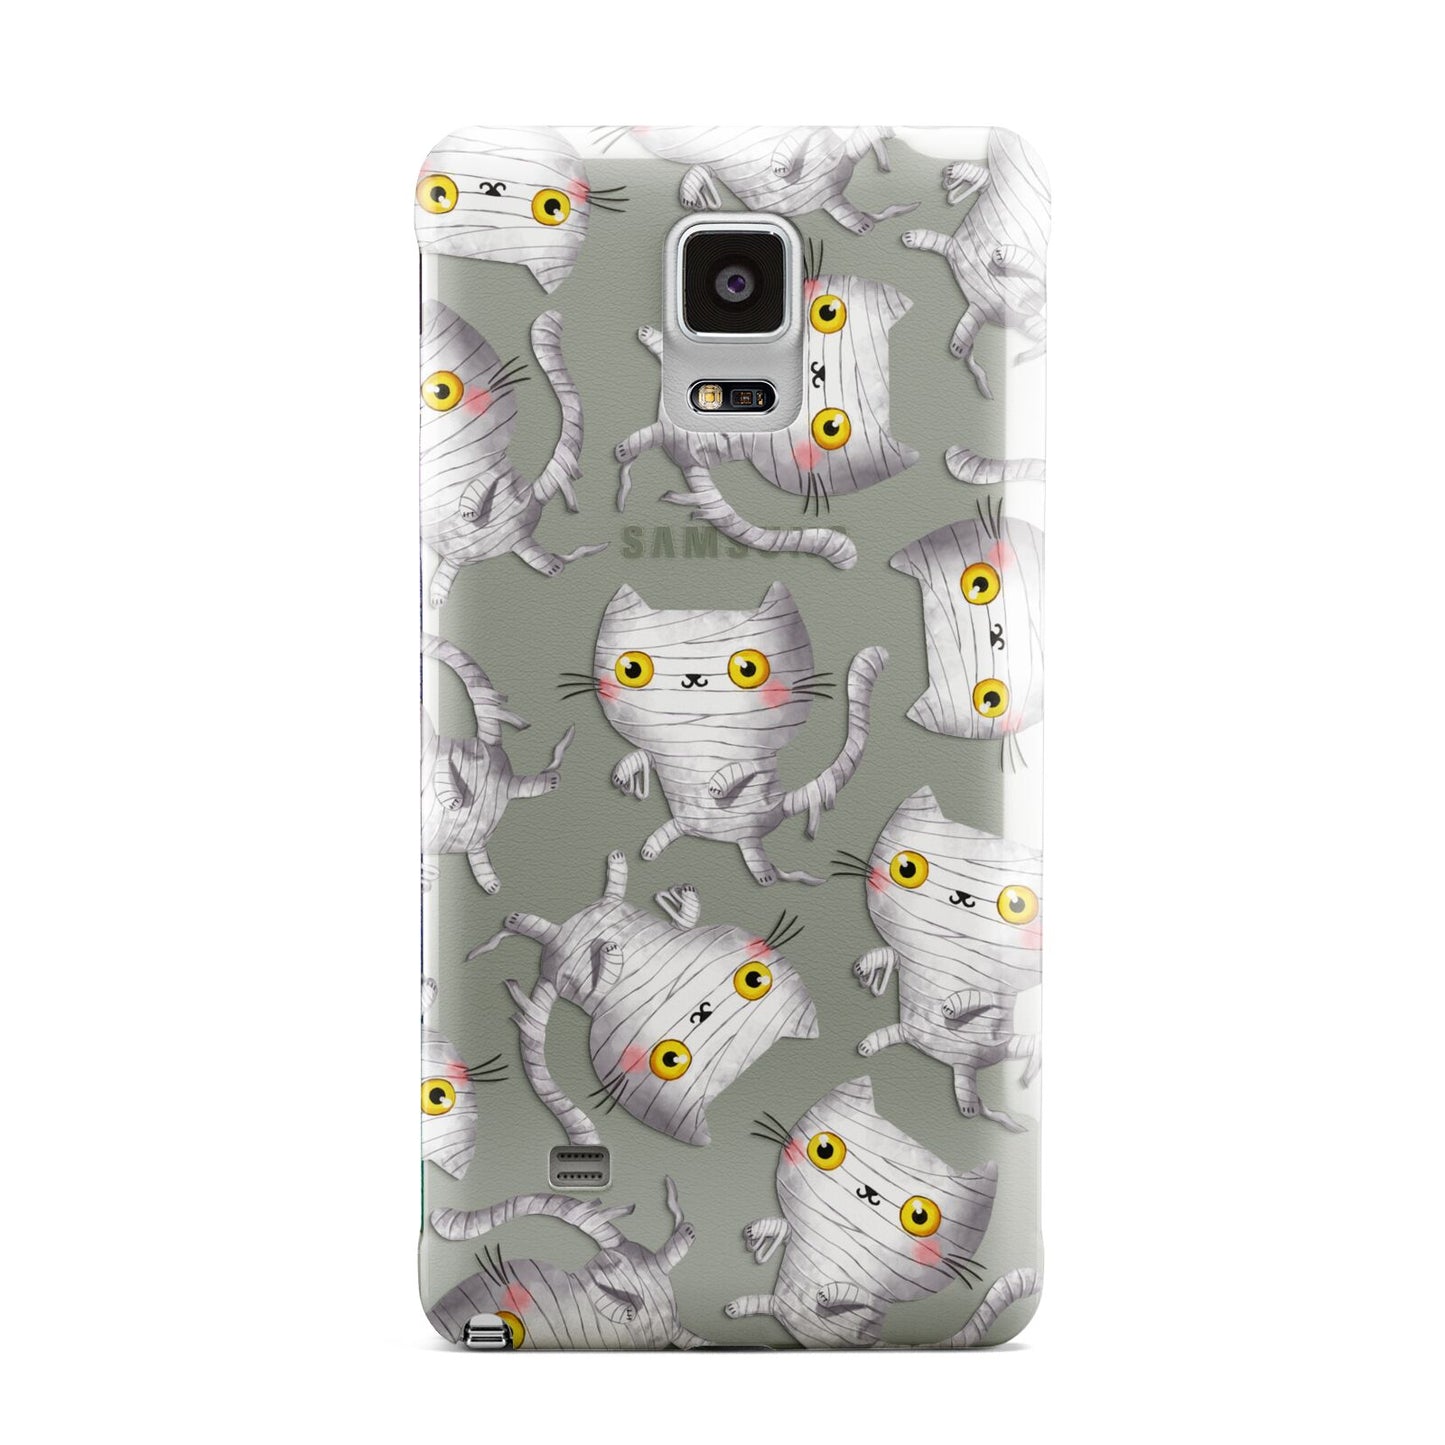 Mummy Cats Samsung Galaxy Note 4 Case